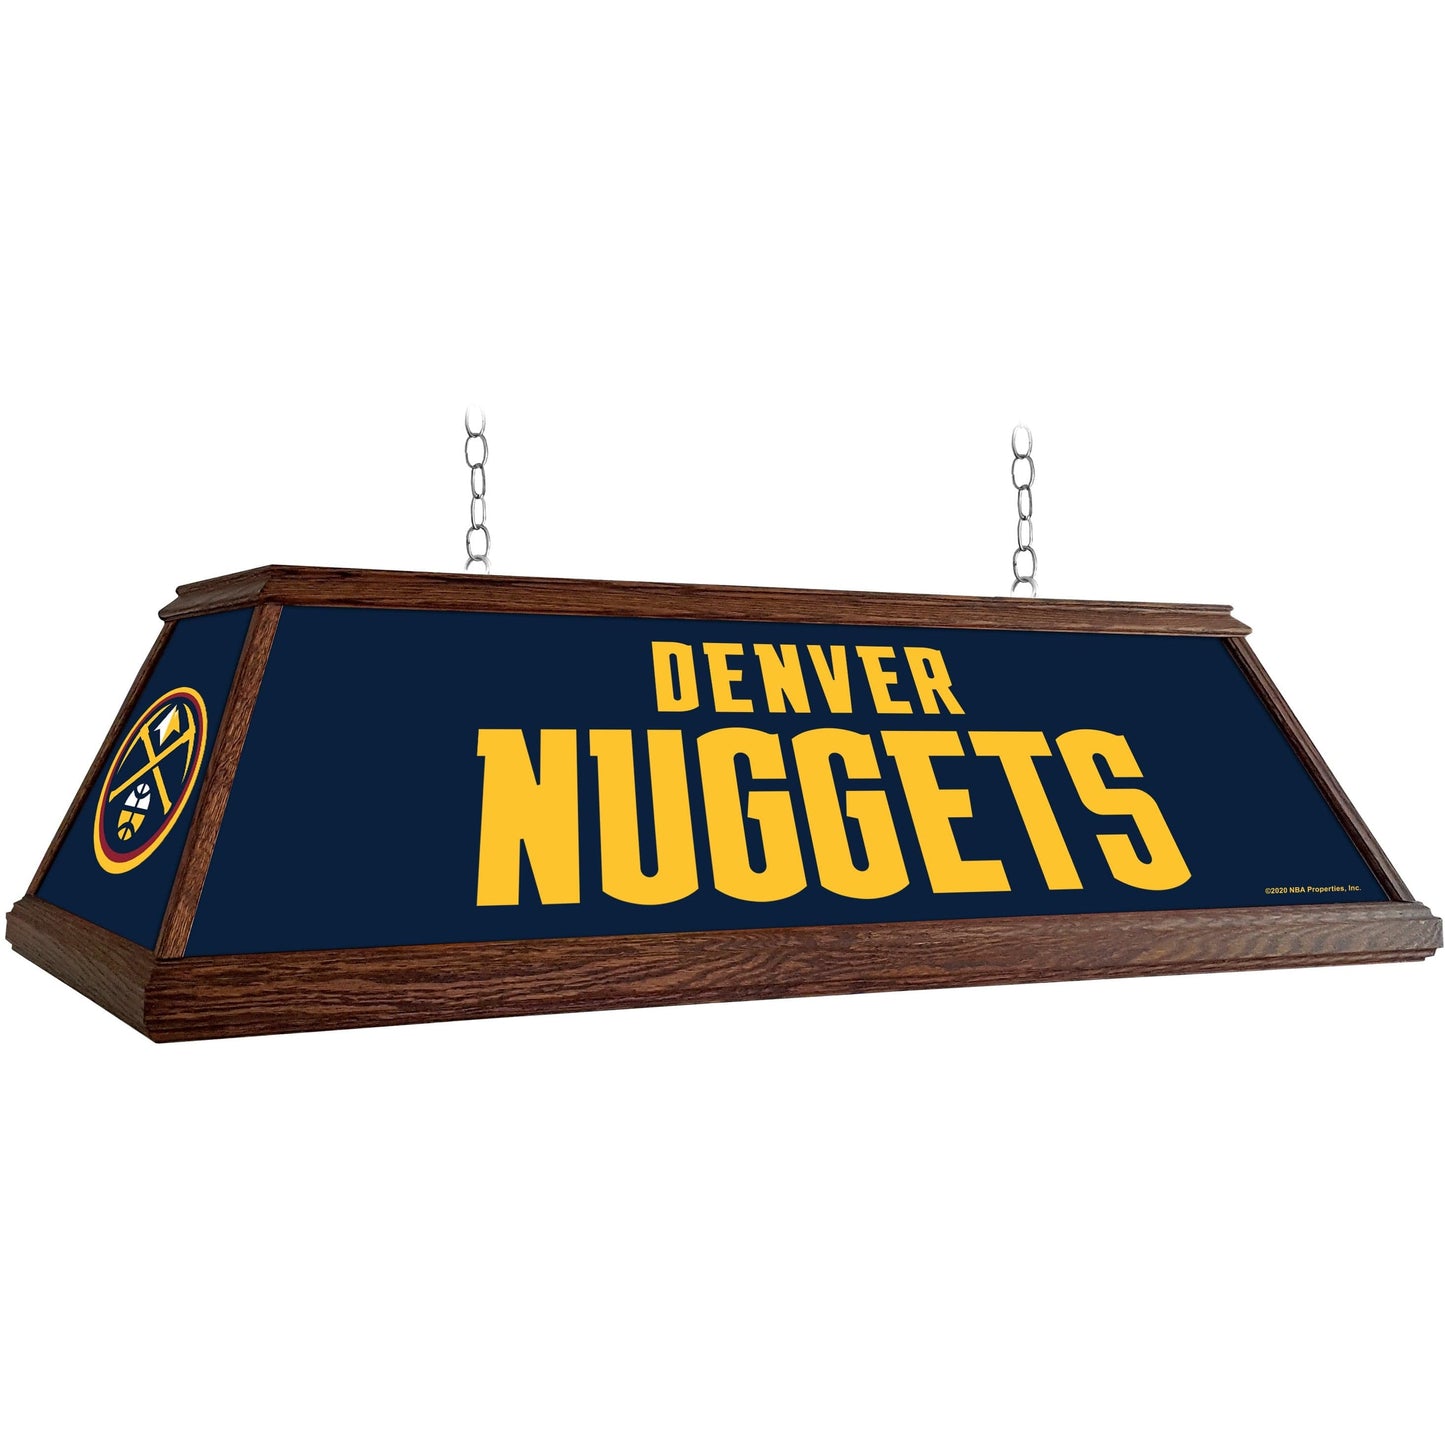 Denver Nuggets: Premium Wood Pool Table Light - The Fan-Brand